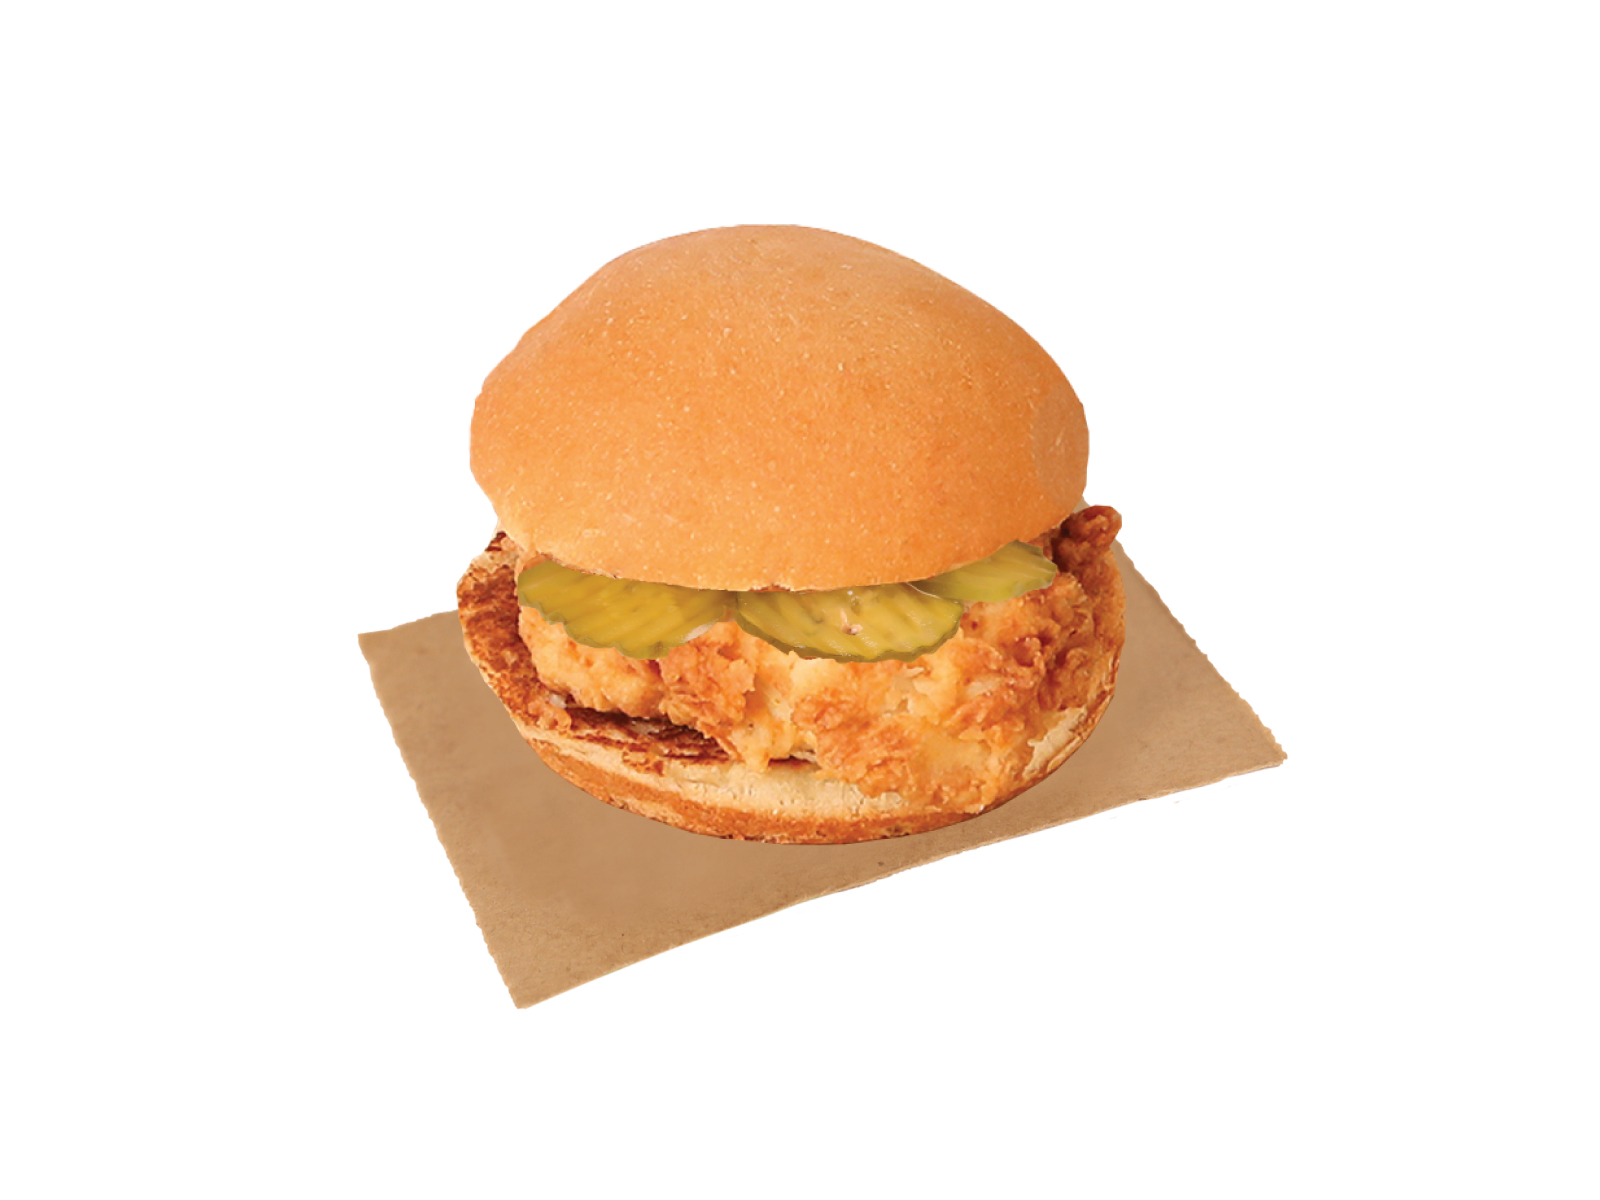 Crispy Chicken Sandwich on a brown paper